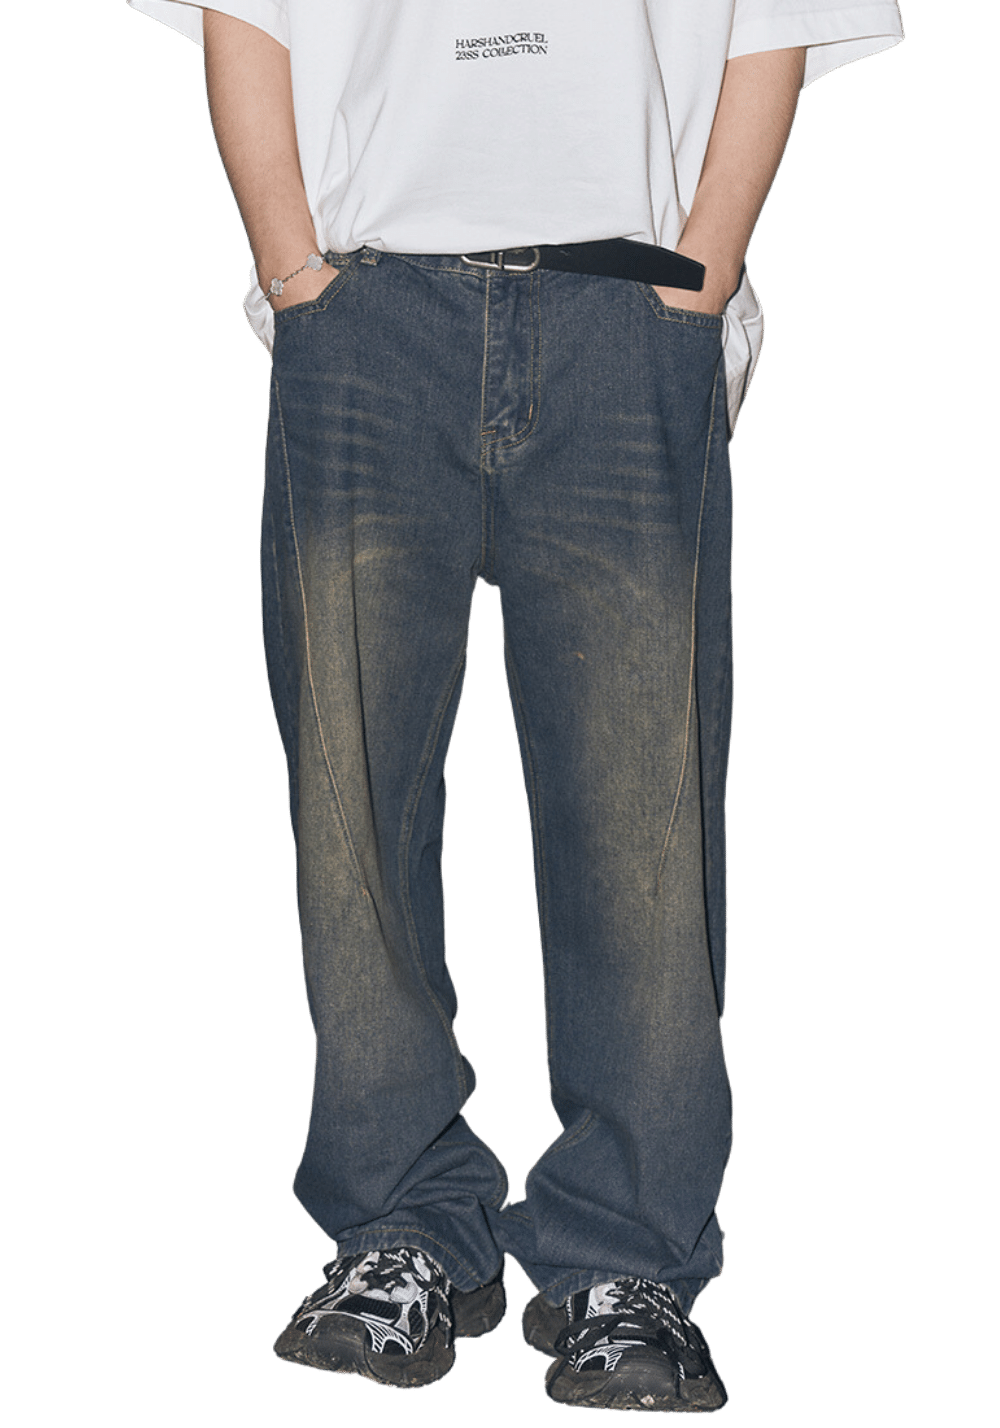 Pocket Embroidery Faded Jeans - PSYLOS 1, Pocket Embroidery Faded Jeans, Pants, HARSH AND CRUEL, PSYLOS 1